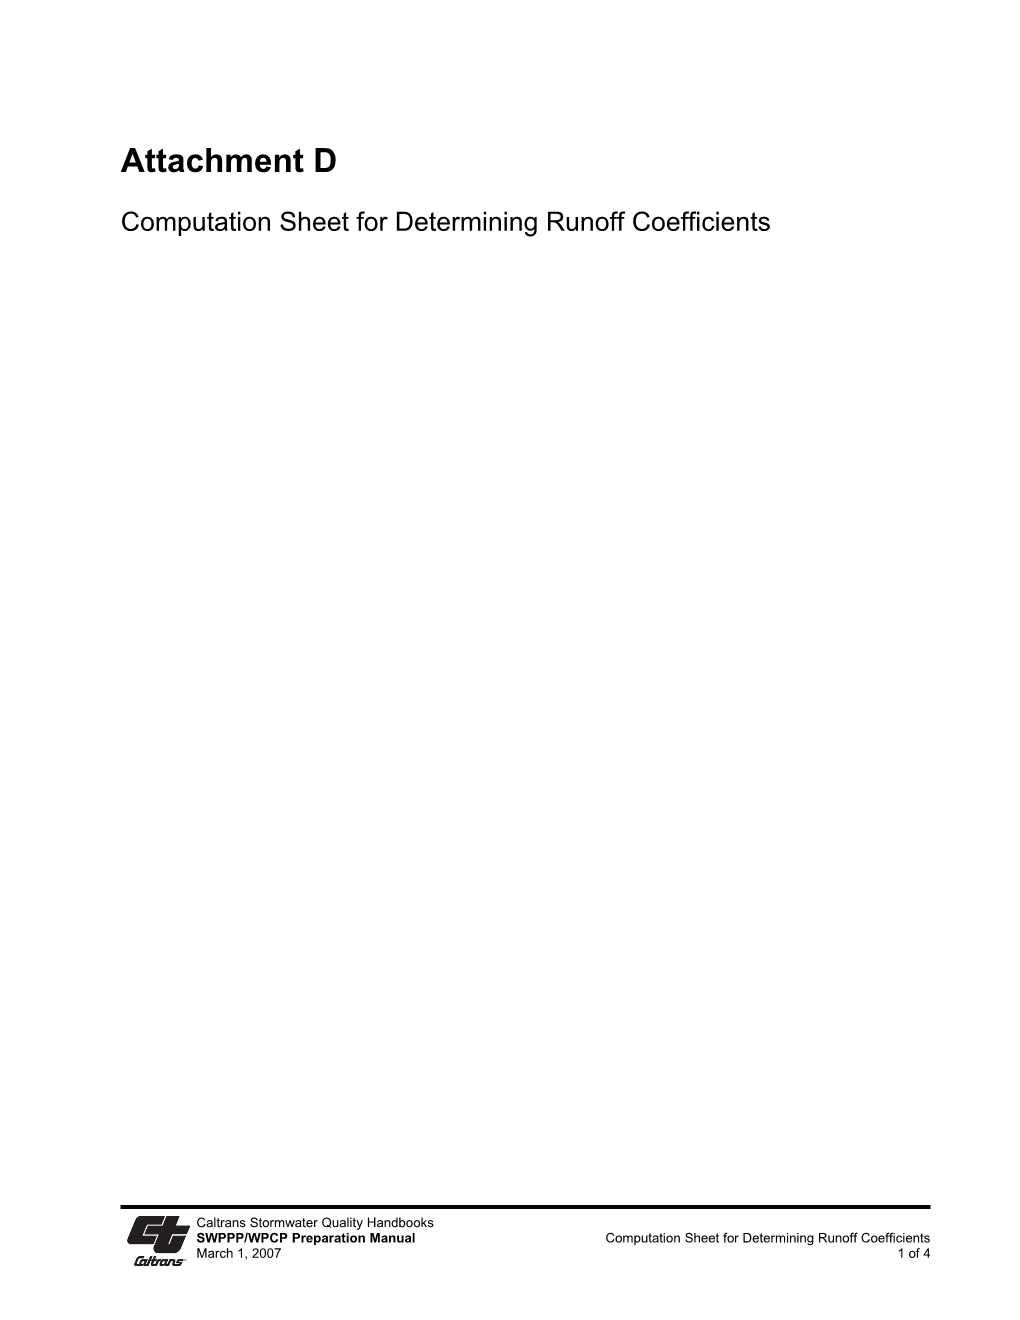 Computation Sheet for Determining Runoff Coefficients